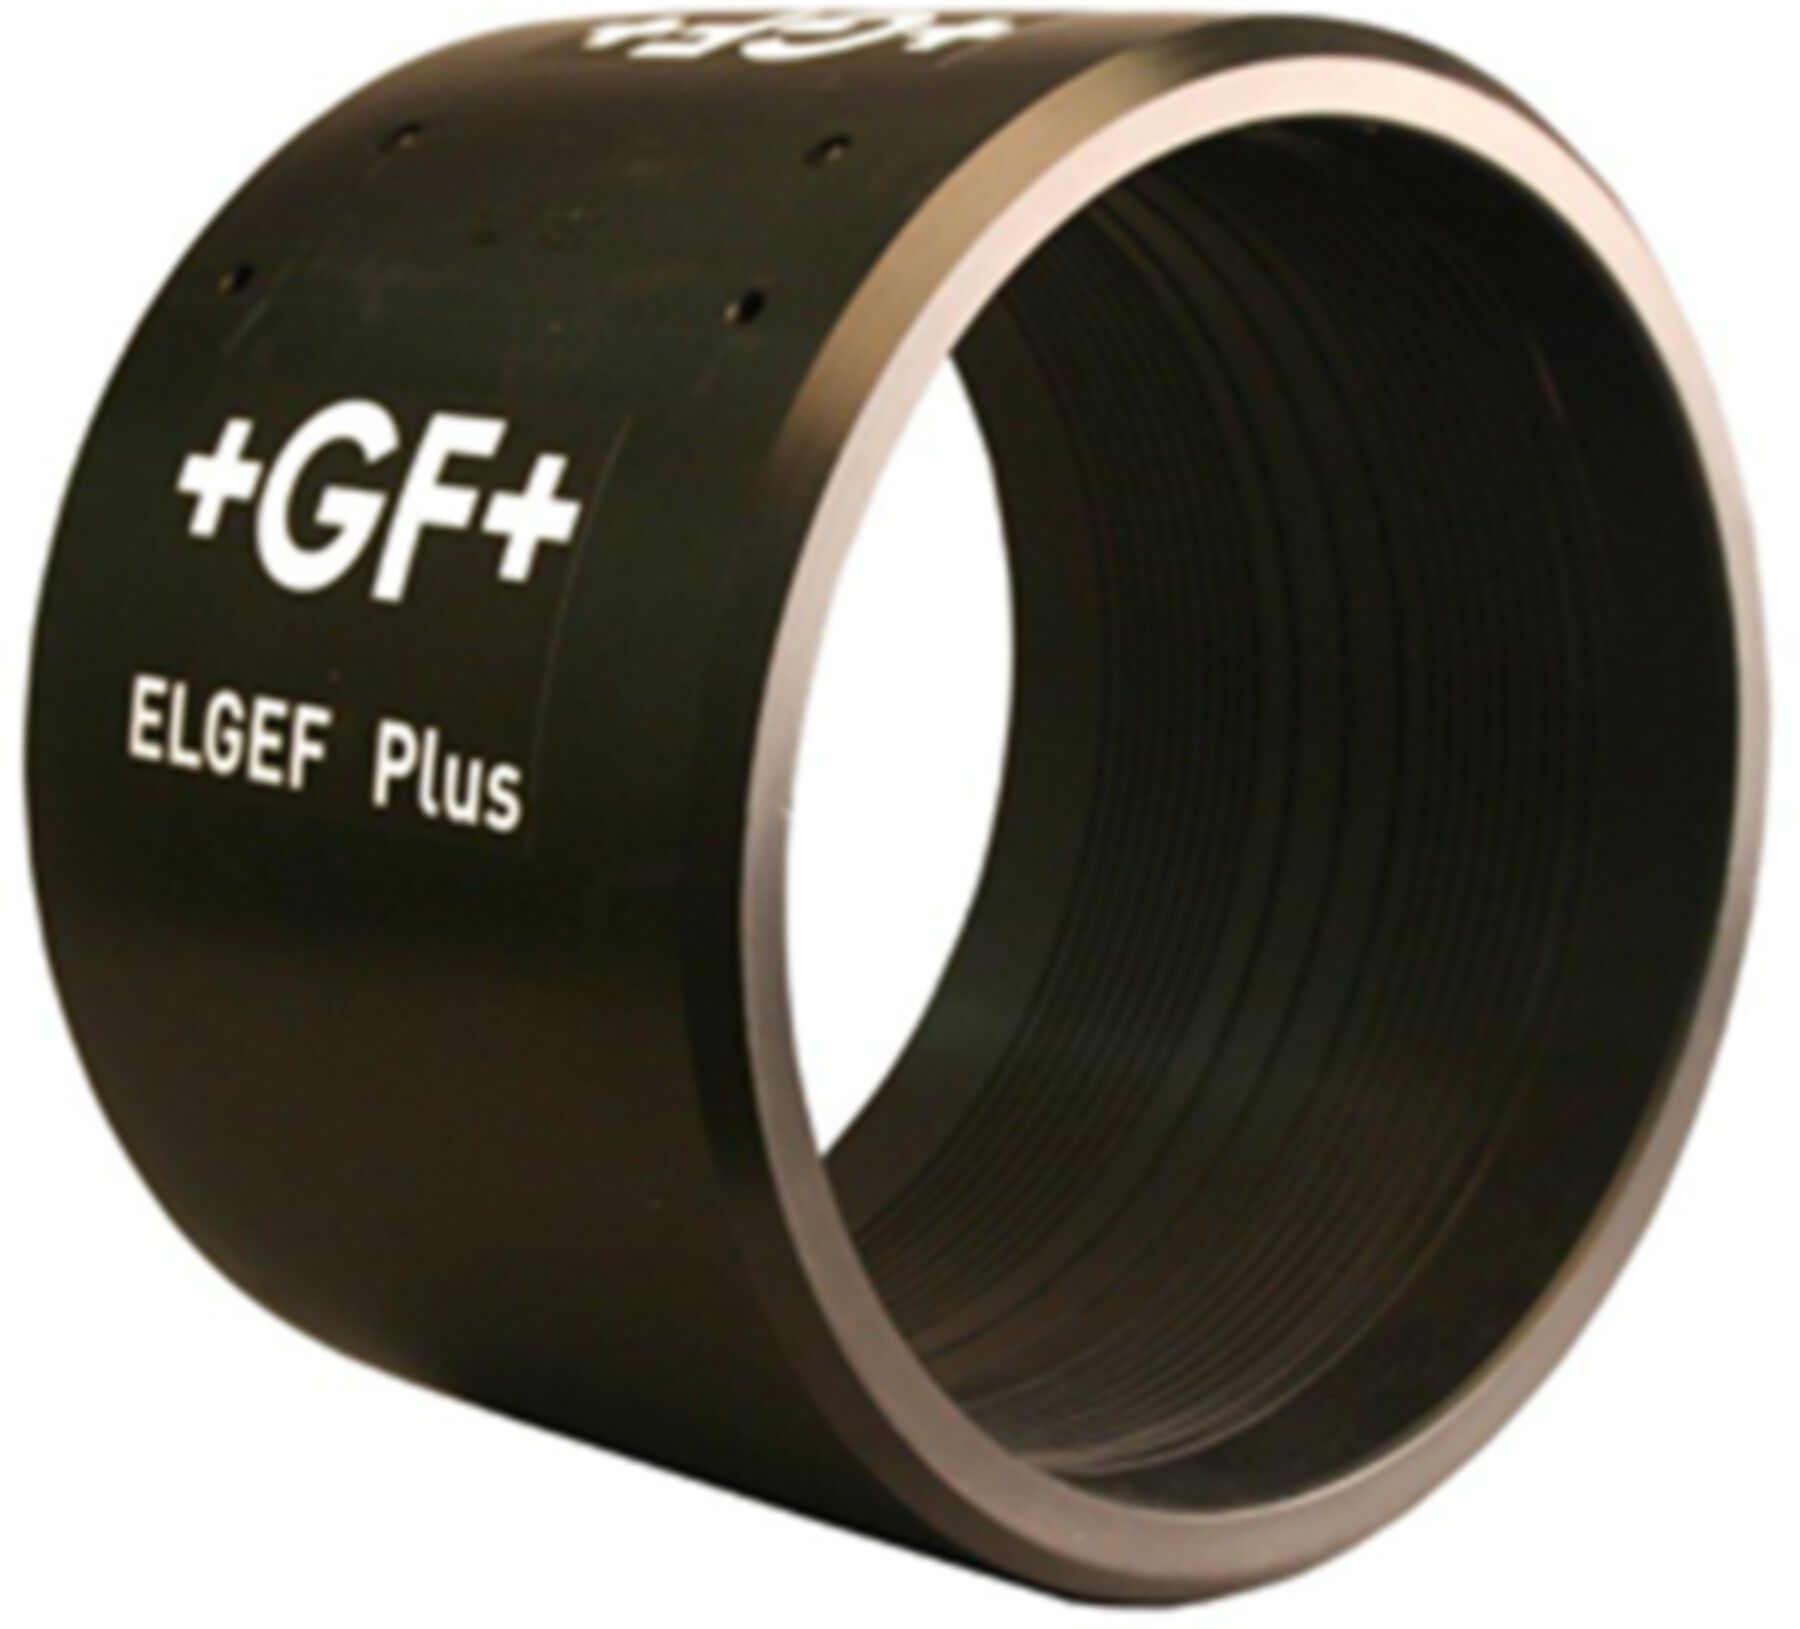 ELGEF Muffe PN 16 d 560mm 753 911 708 - ELGEF Plus Elektroschweissfittinge